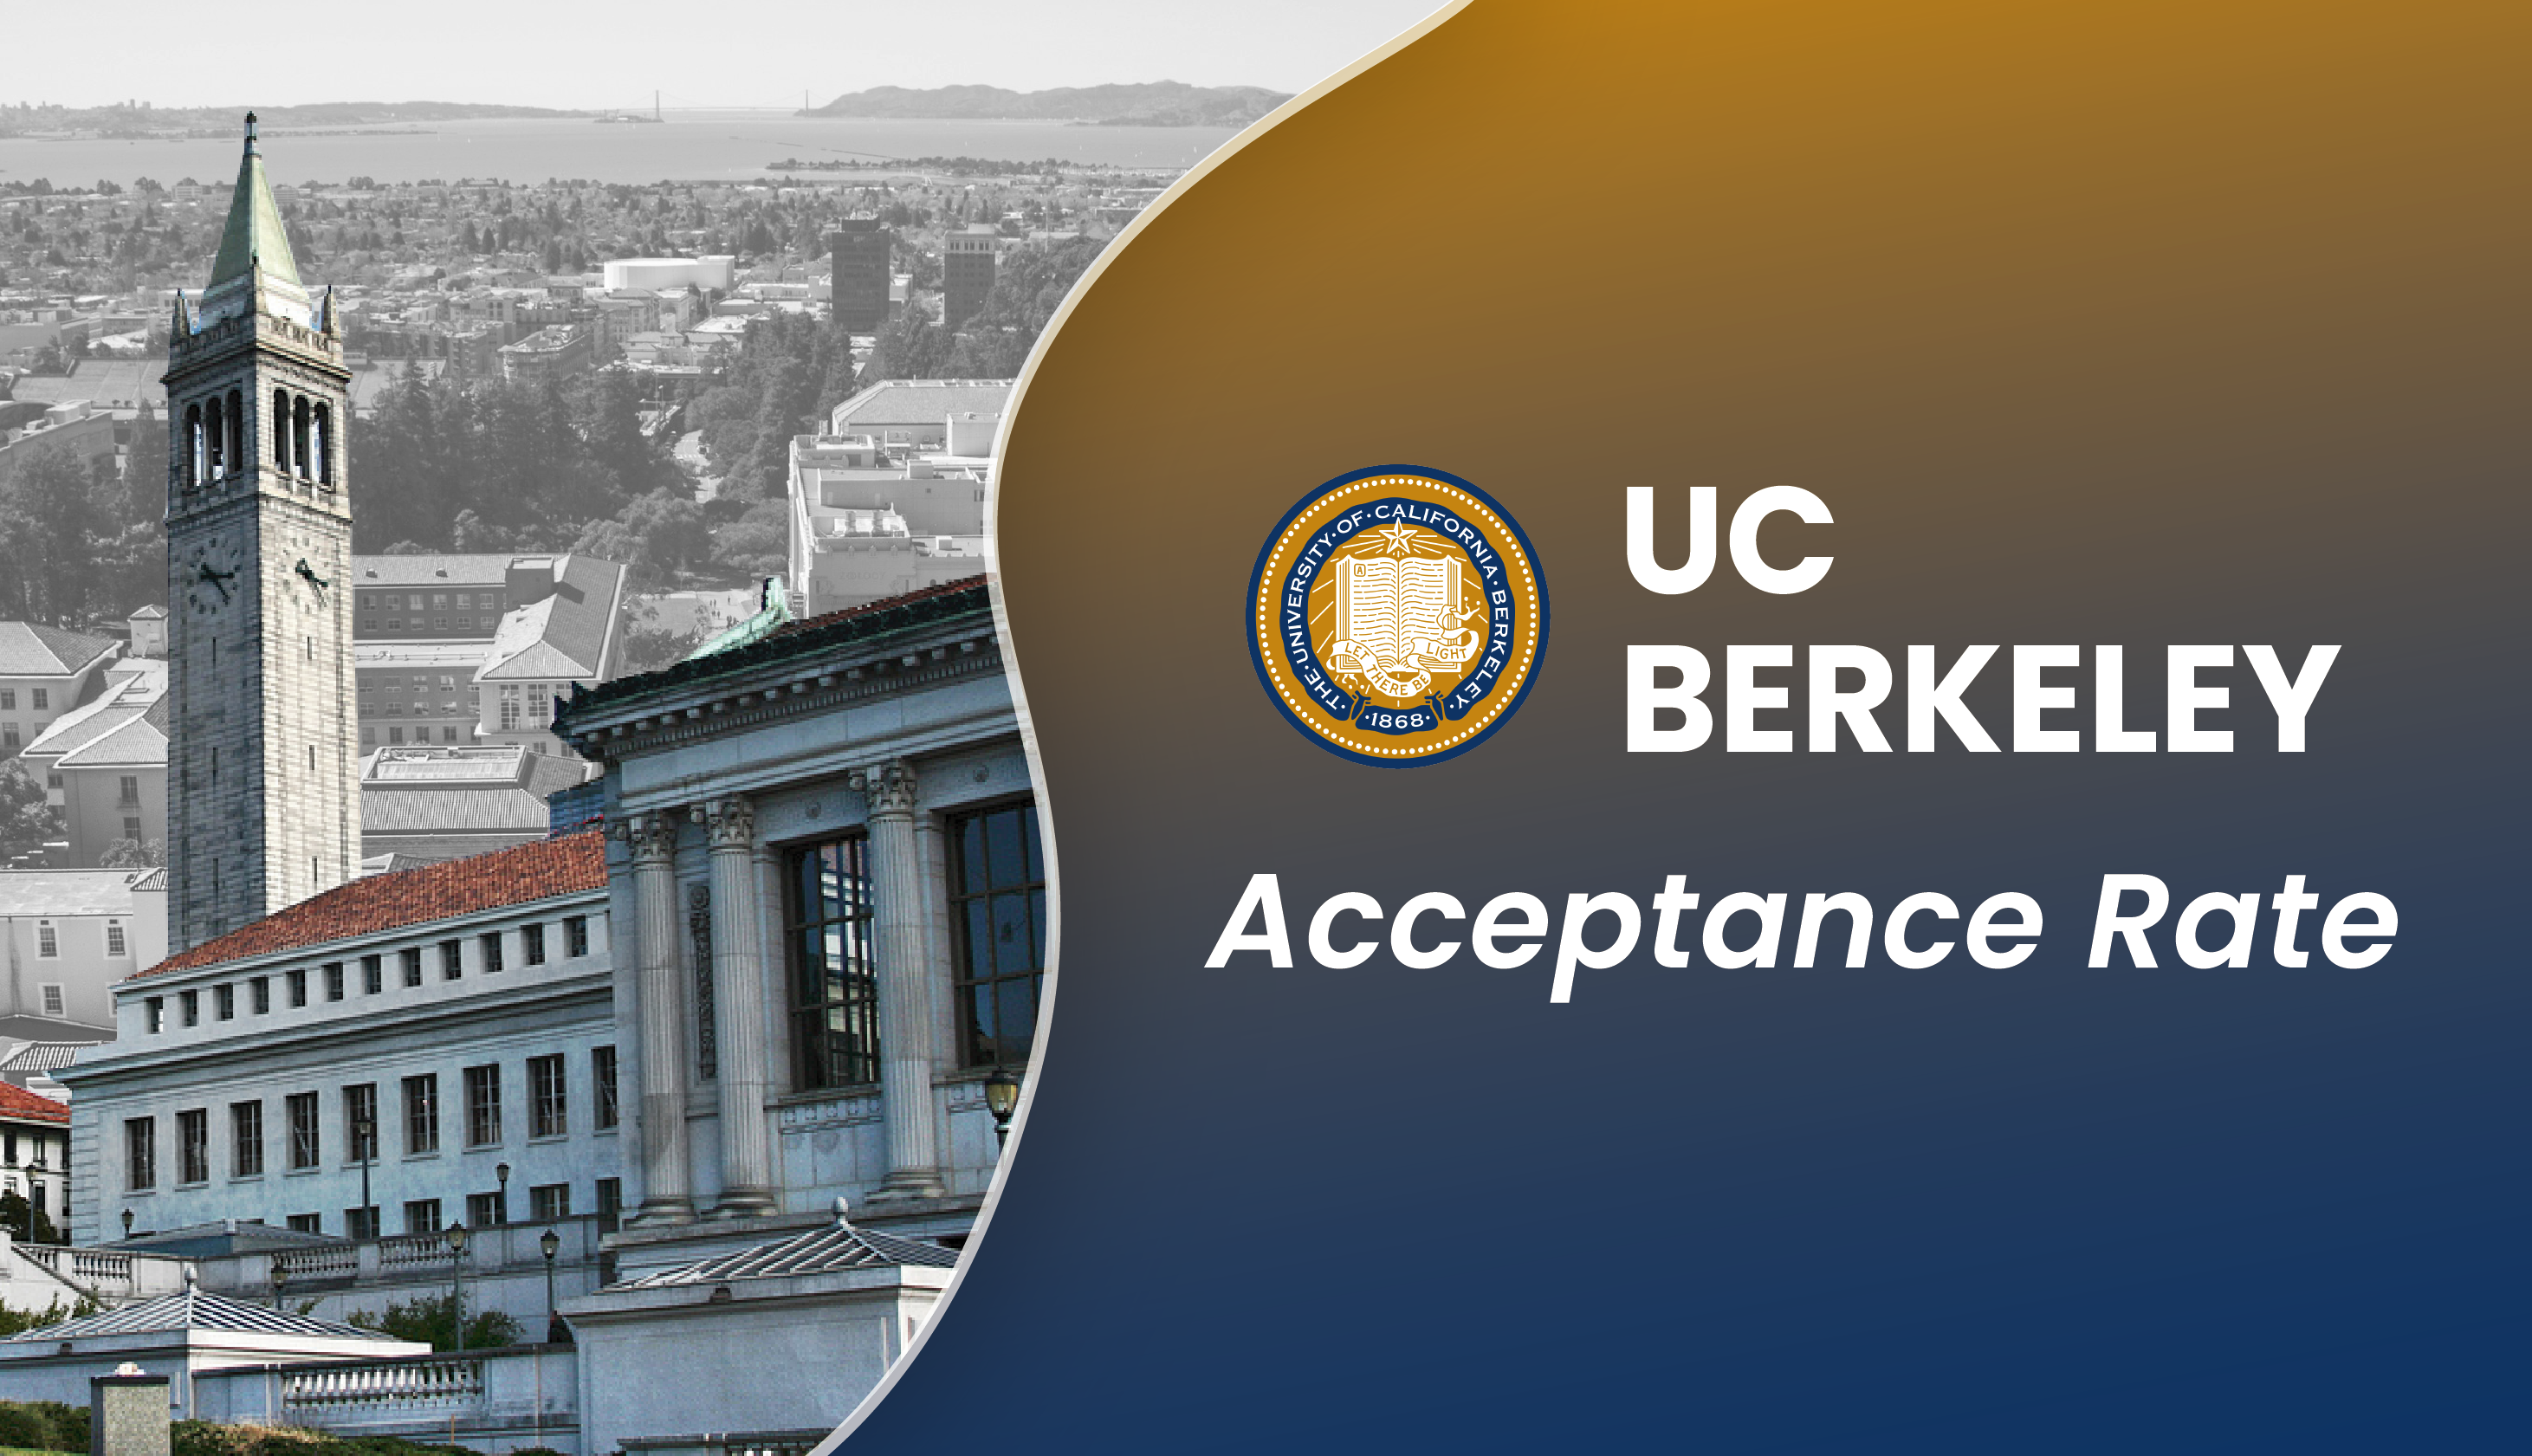 uc berkeley chemistry phd acceptance rate